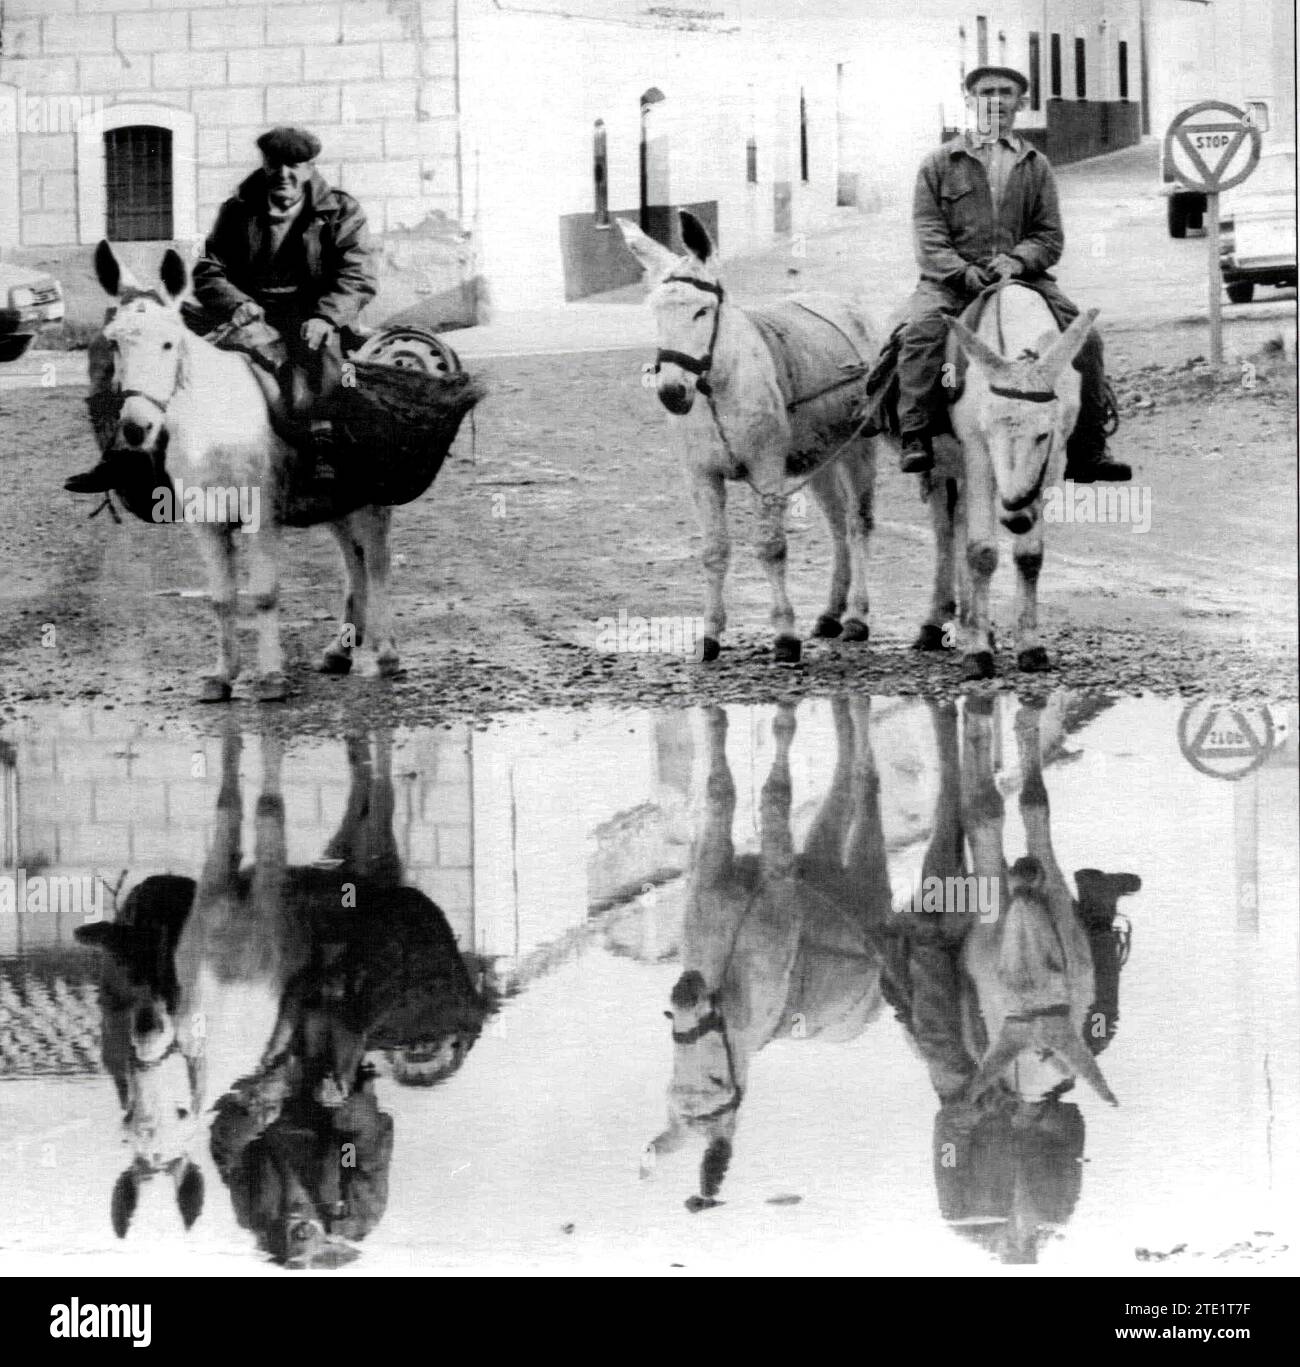 05/01/1993. Two Men with their Donkeys in the town Belvís de la Jara (Toledo). Credit: Album / Archivo ABC / Carlos Moreno Stock Photo